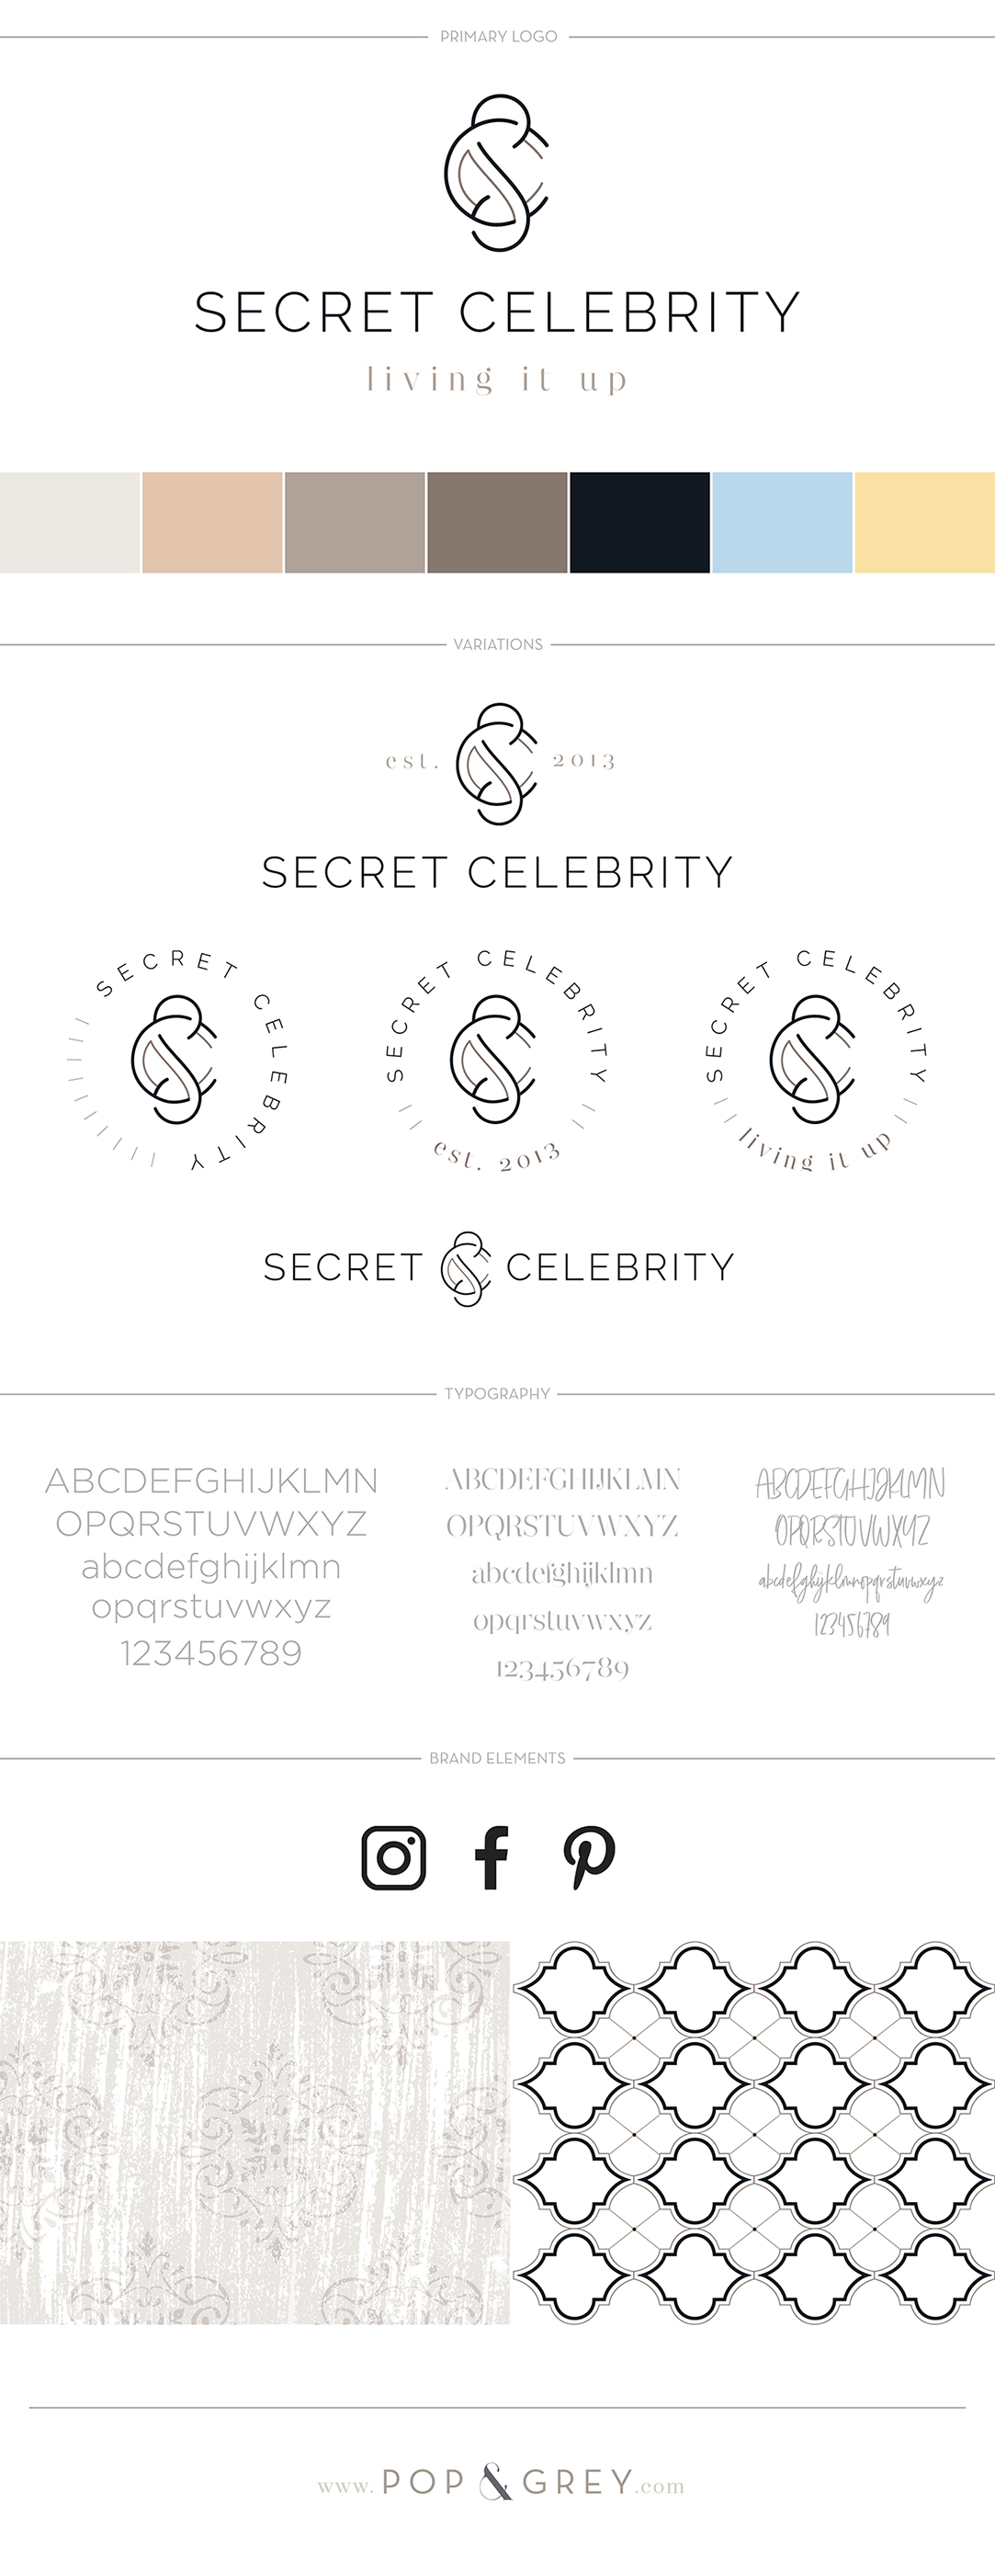 Secret Celebrity Brand Design